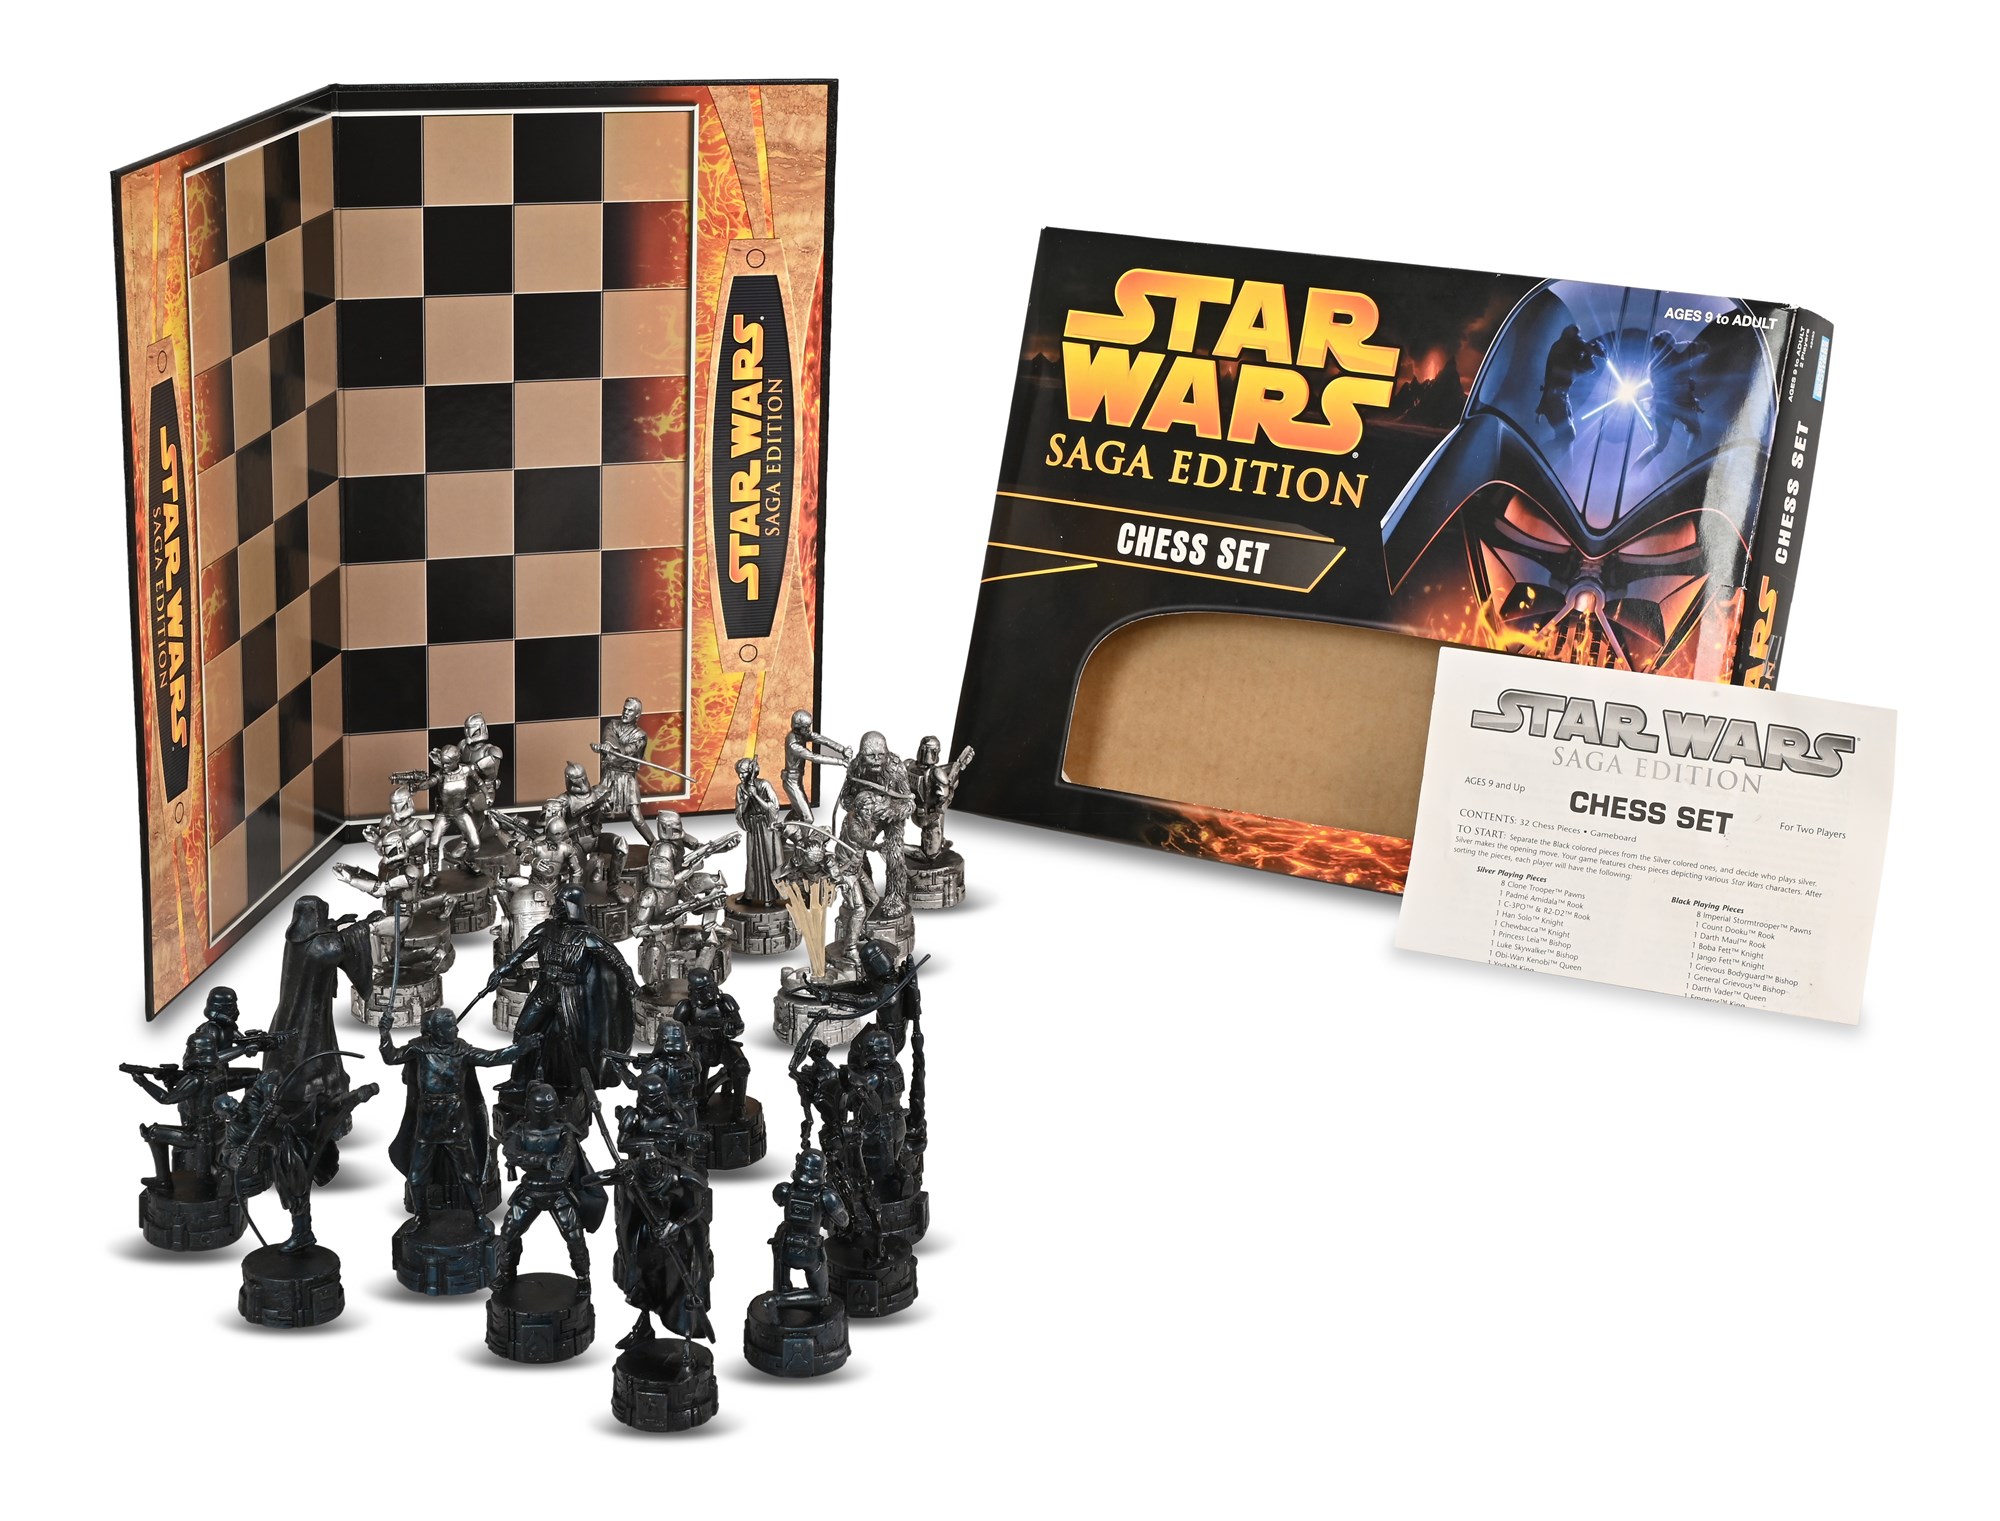  Star Wars Saga Edition Chess Set for 8 years old